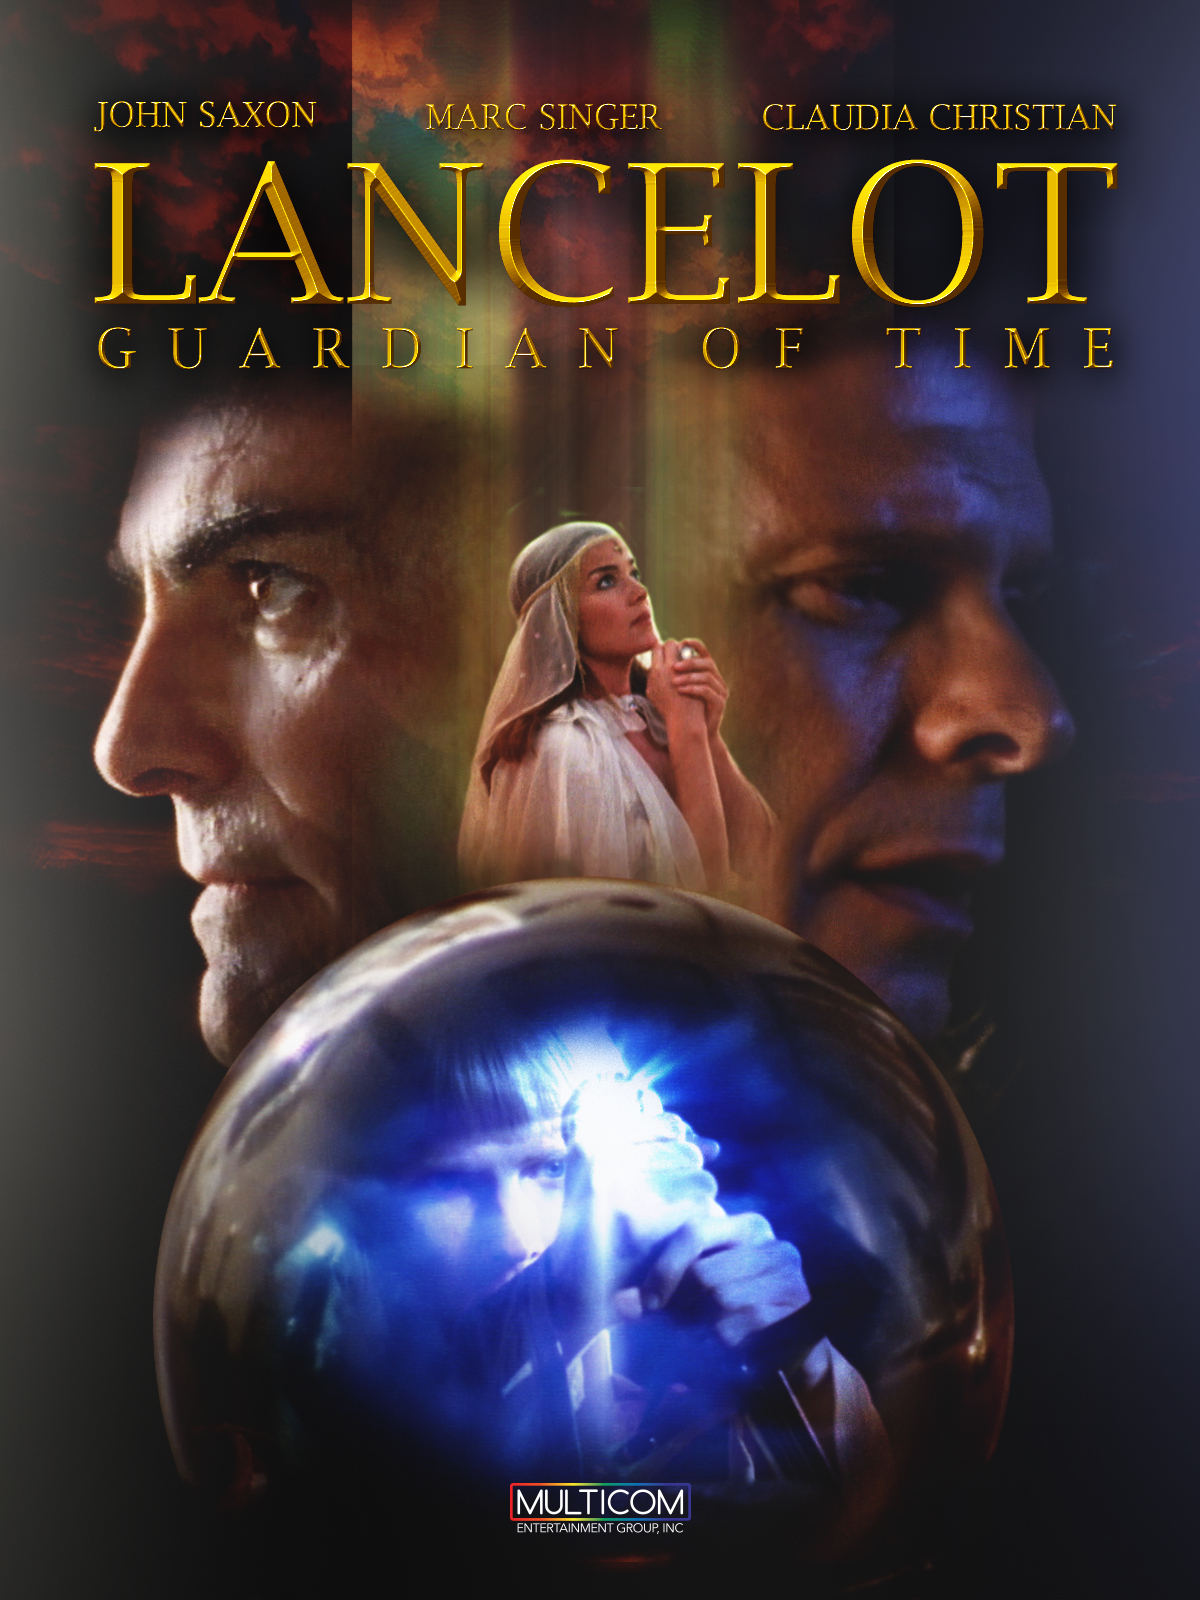 Lancelot: Guardian of Time (1997) starring Marc Singer on DVD on DVD